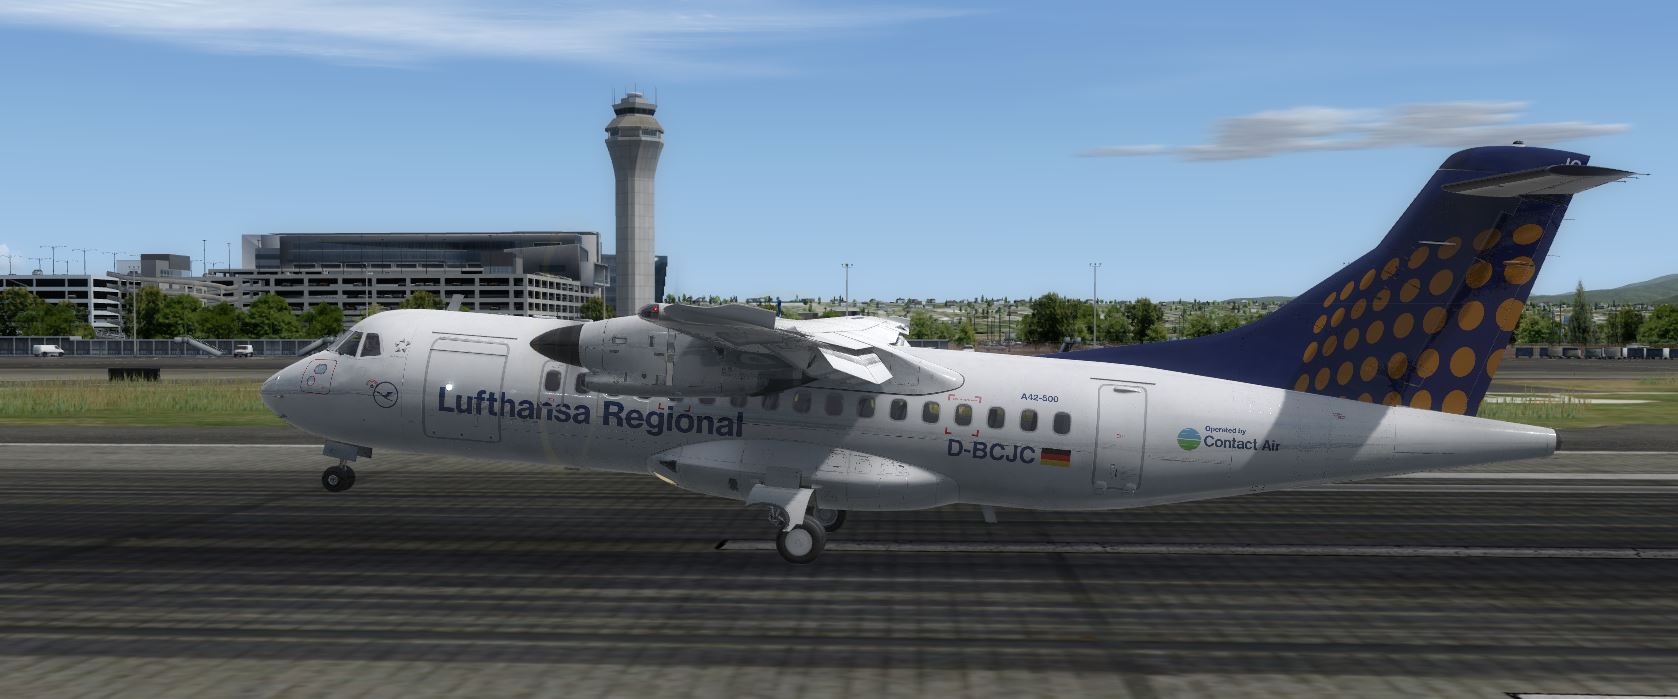 ATR42-500 Lufthansa-6491 